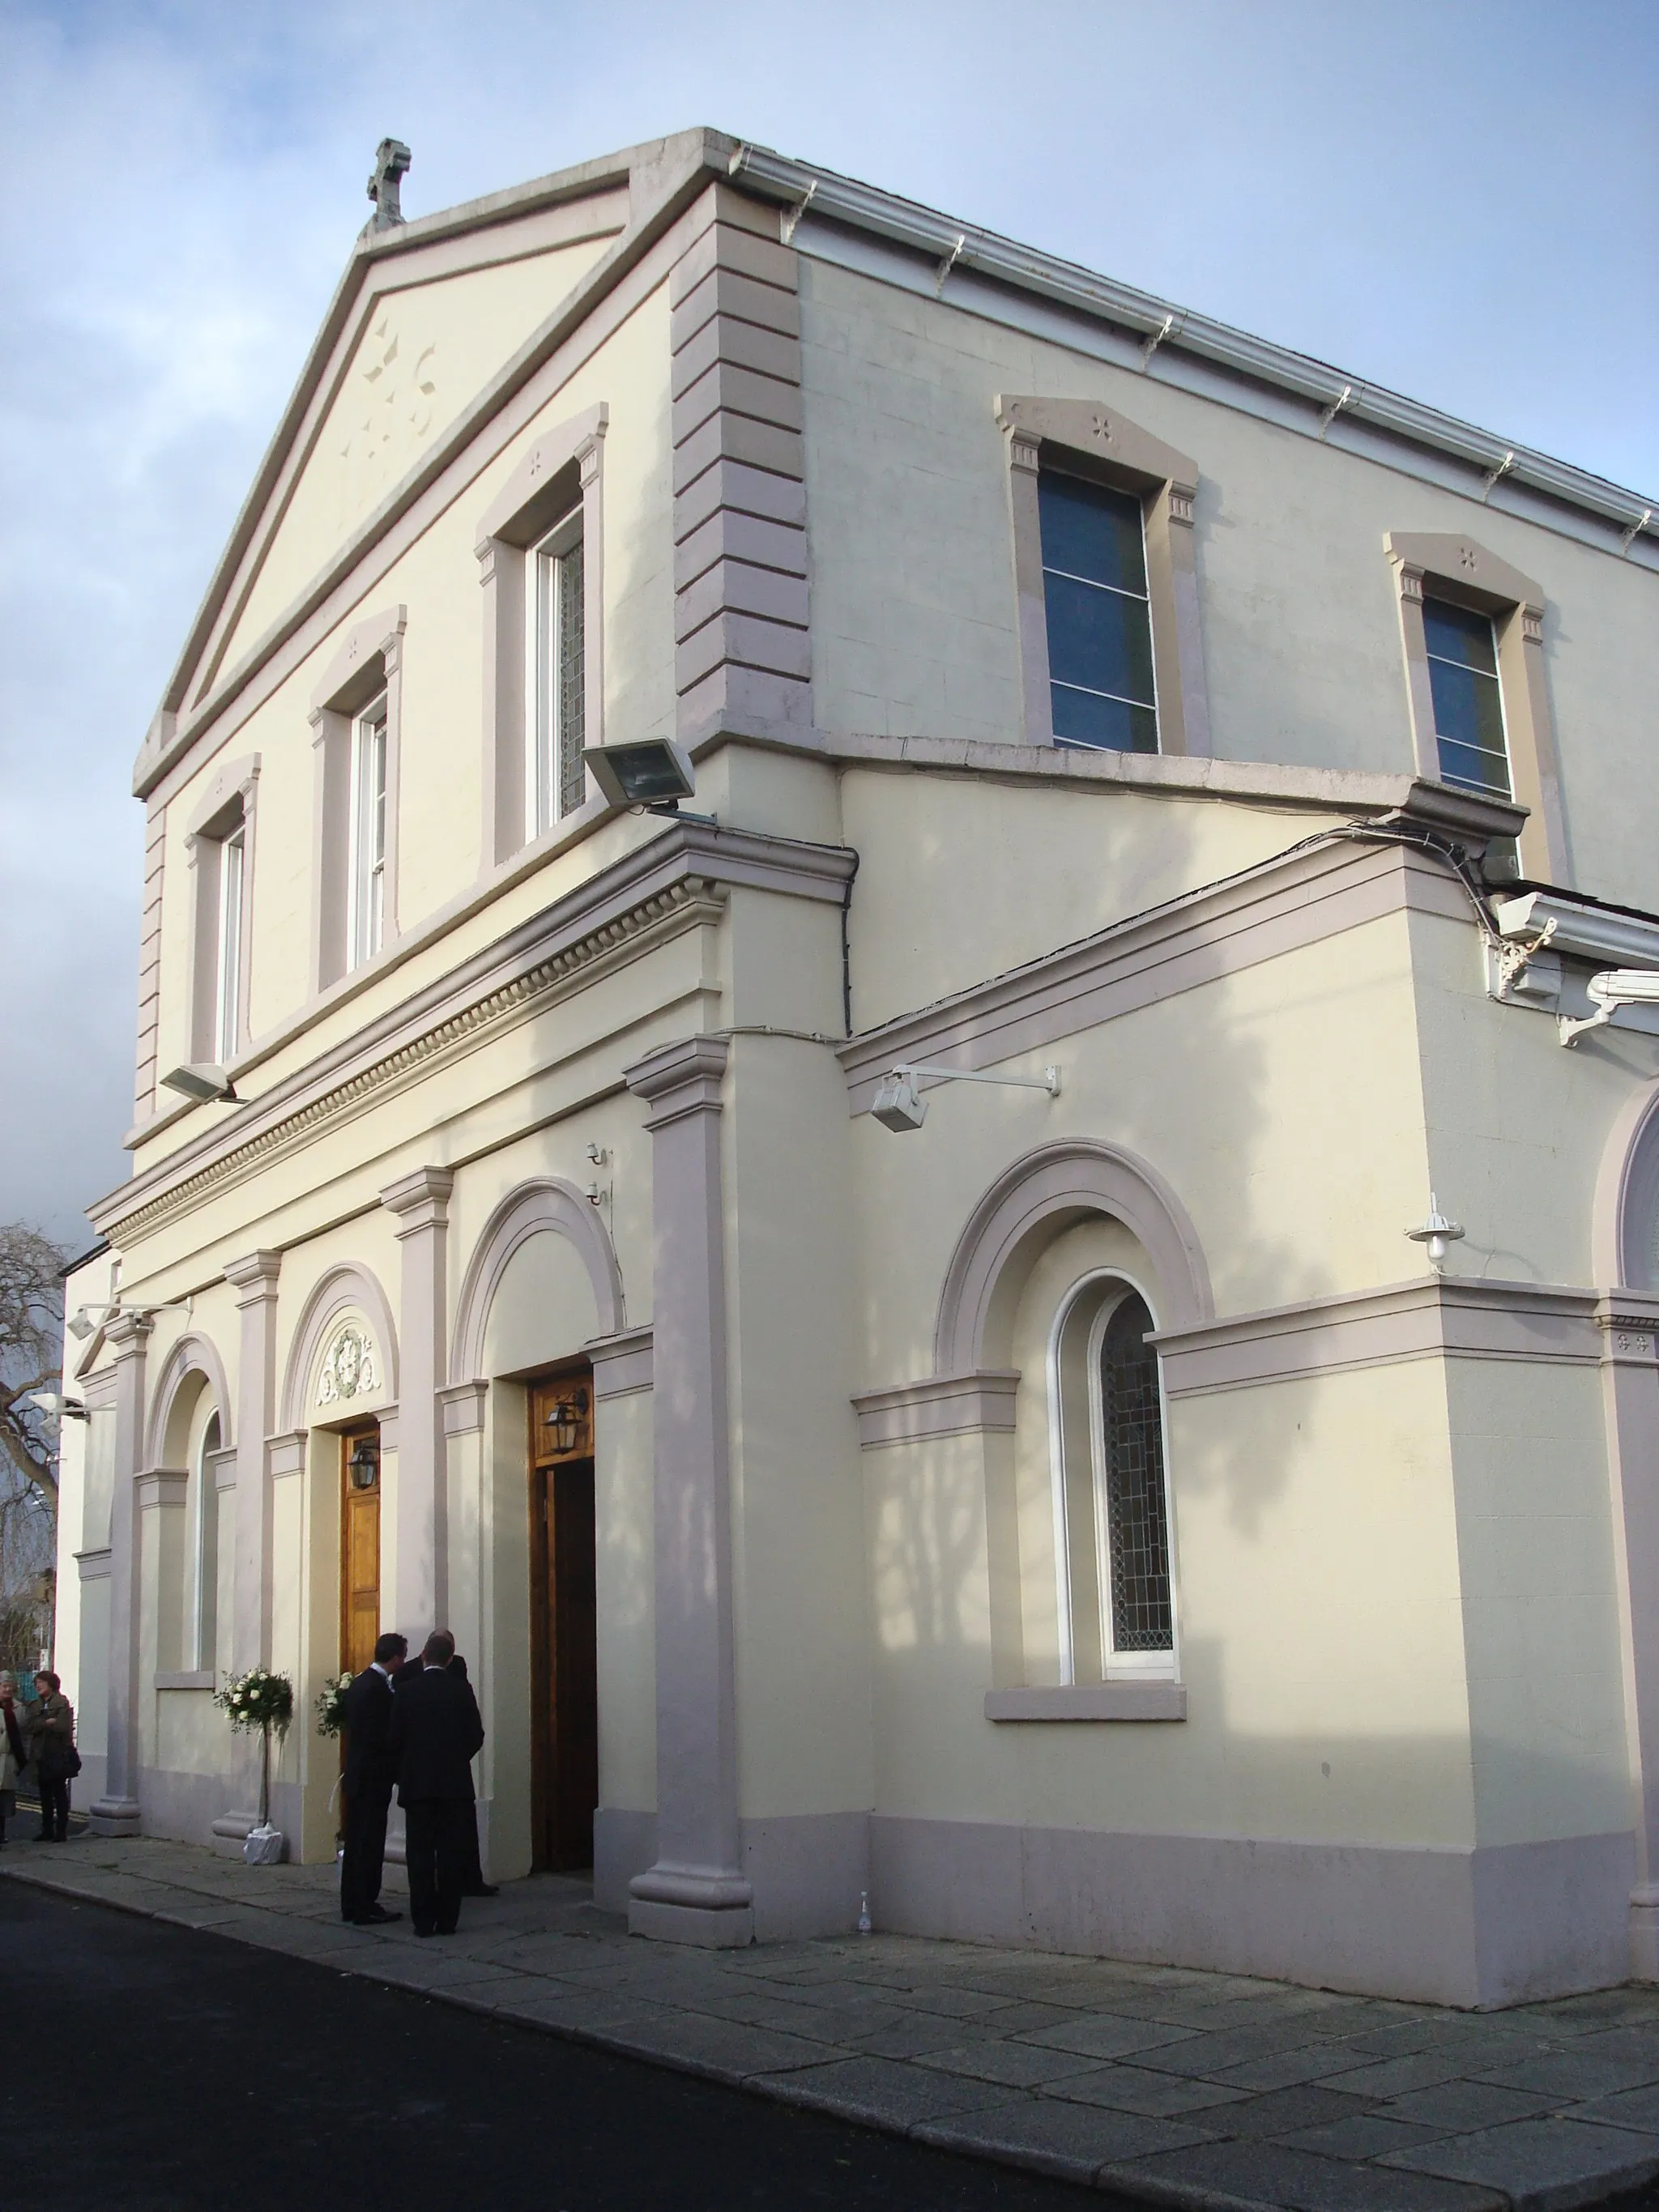 Photo showing: Church of the Assumption Booterstown, Dublin, Ireland